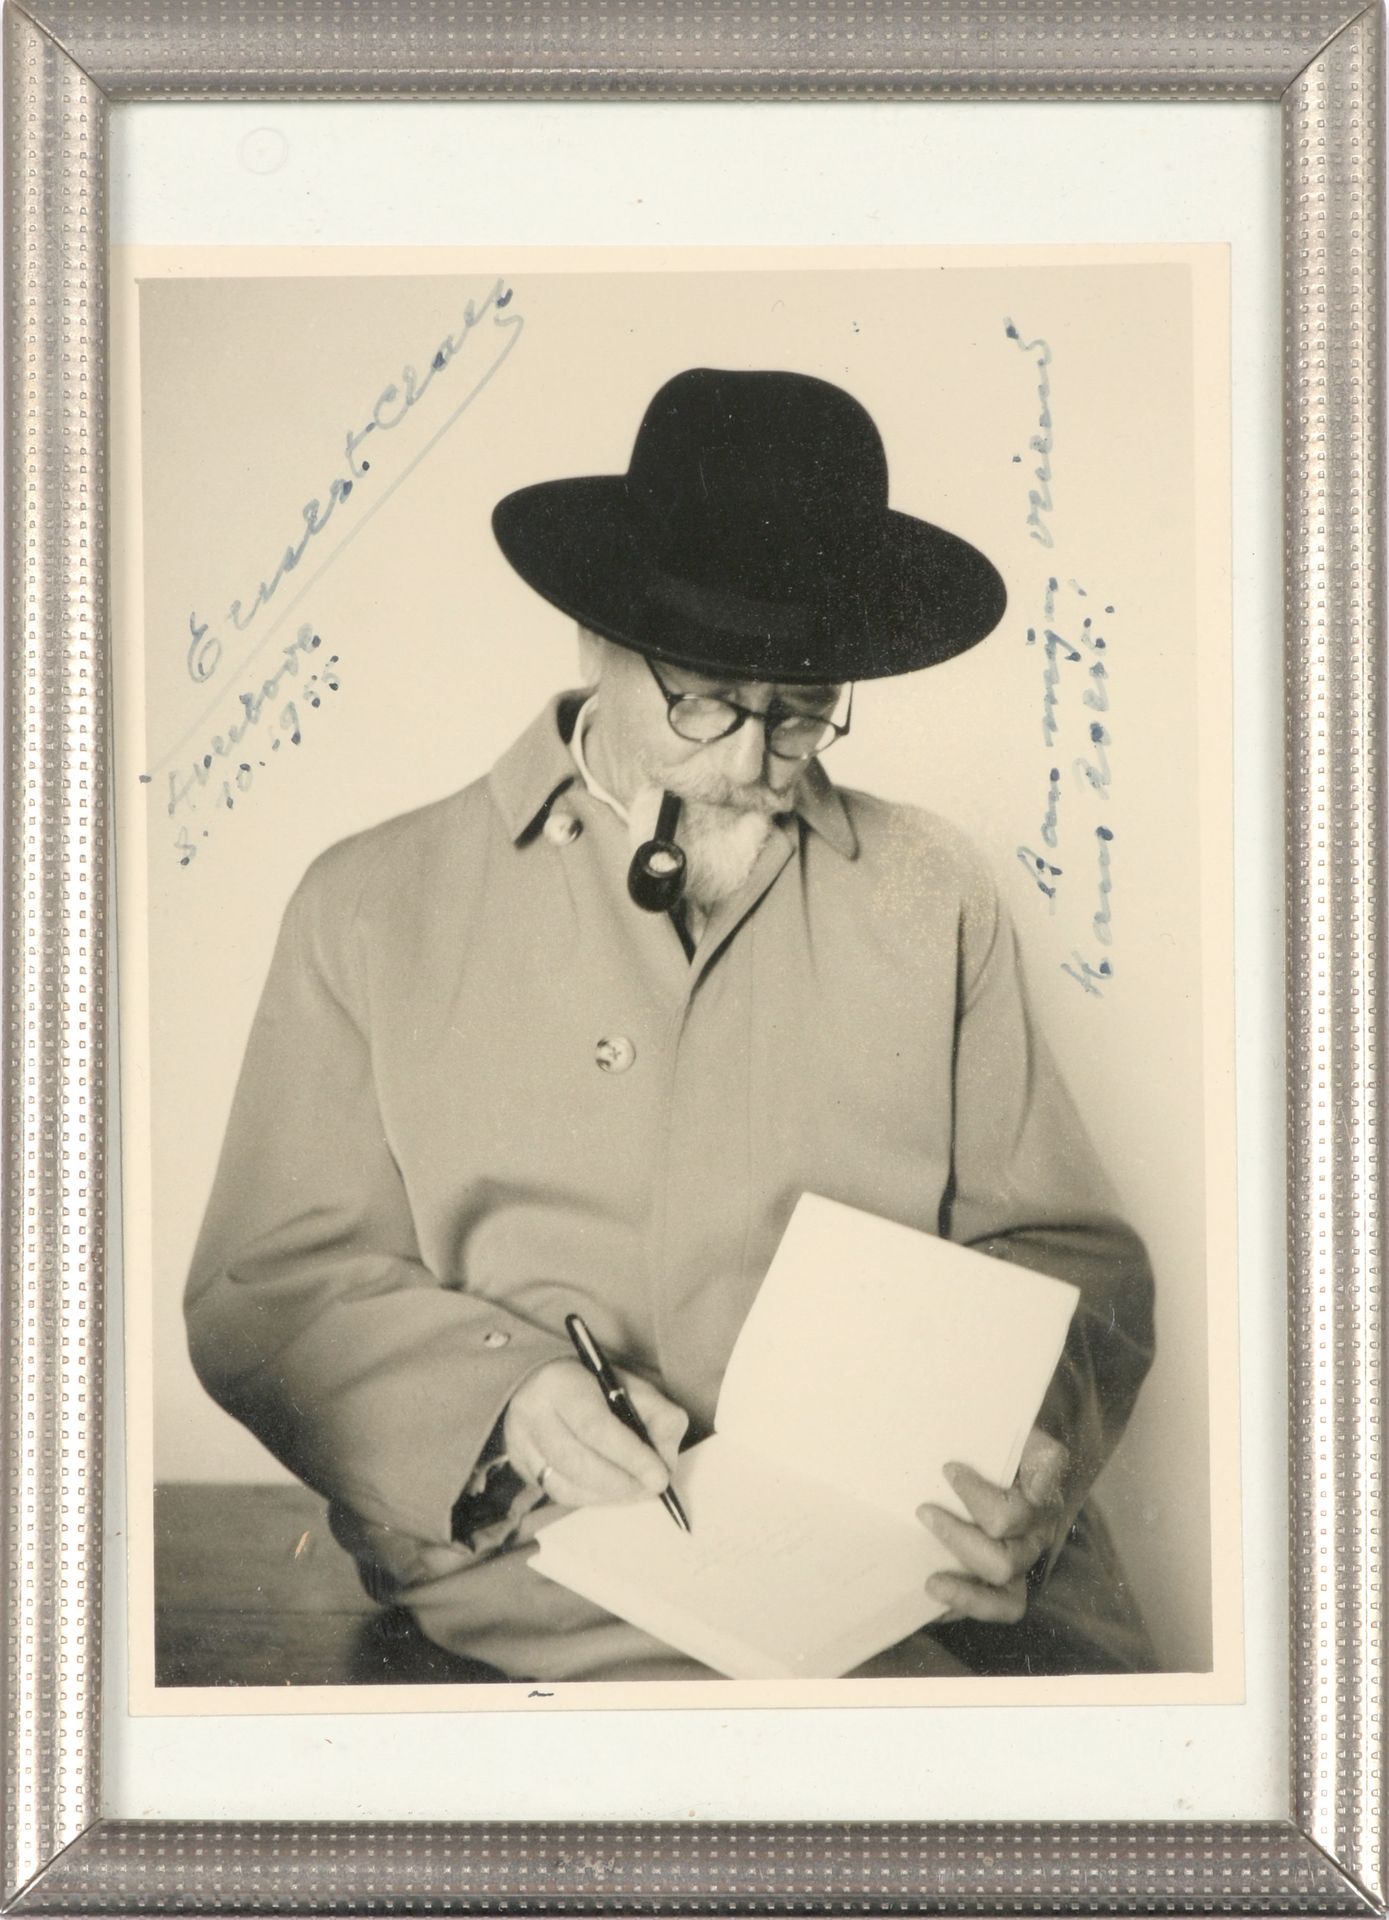 CLAES, Ernest Portret met hoed en boek

Originele foto (11.5 x 8.5 cm), met gesc&hellip;